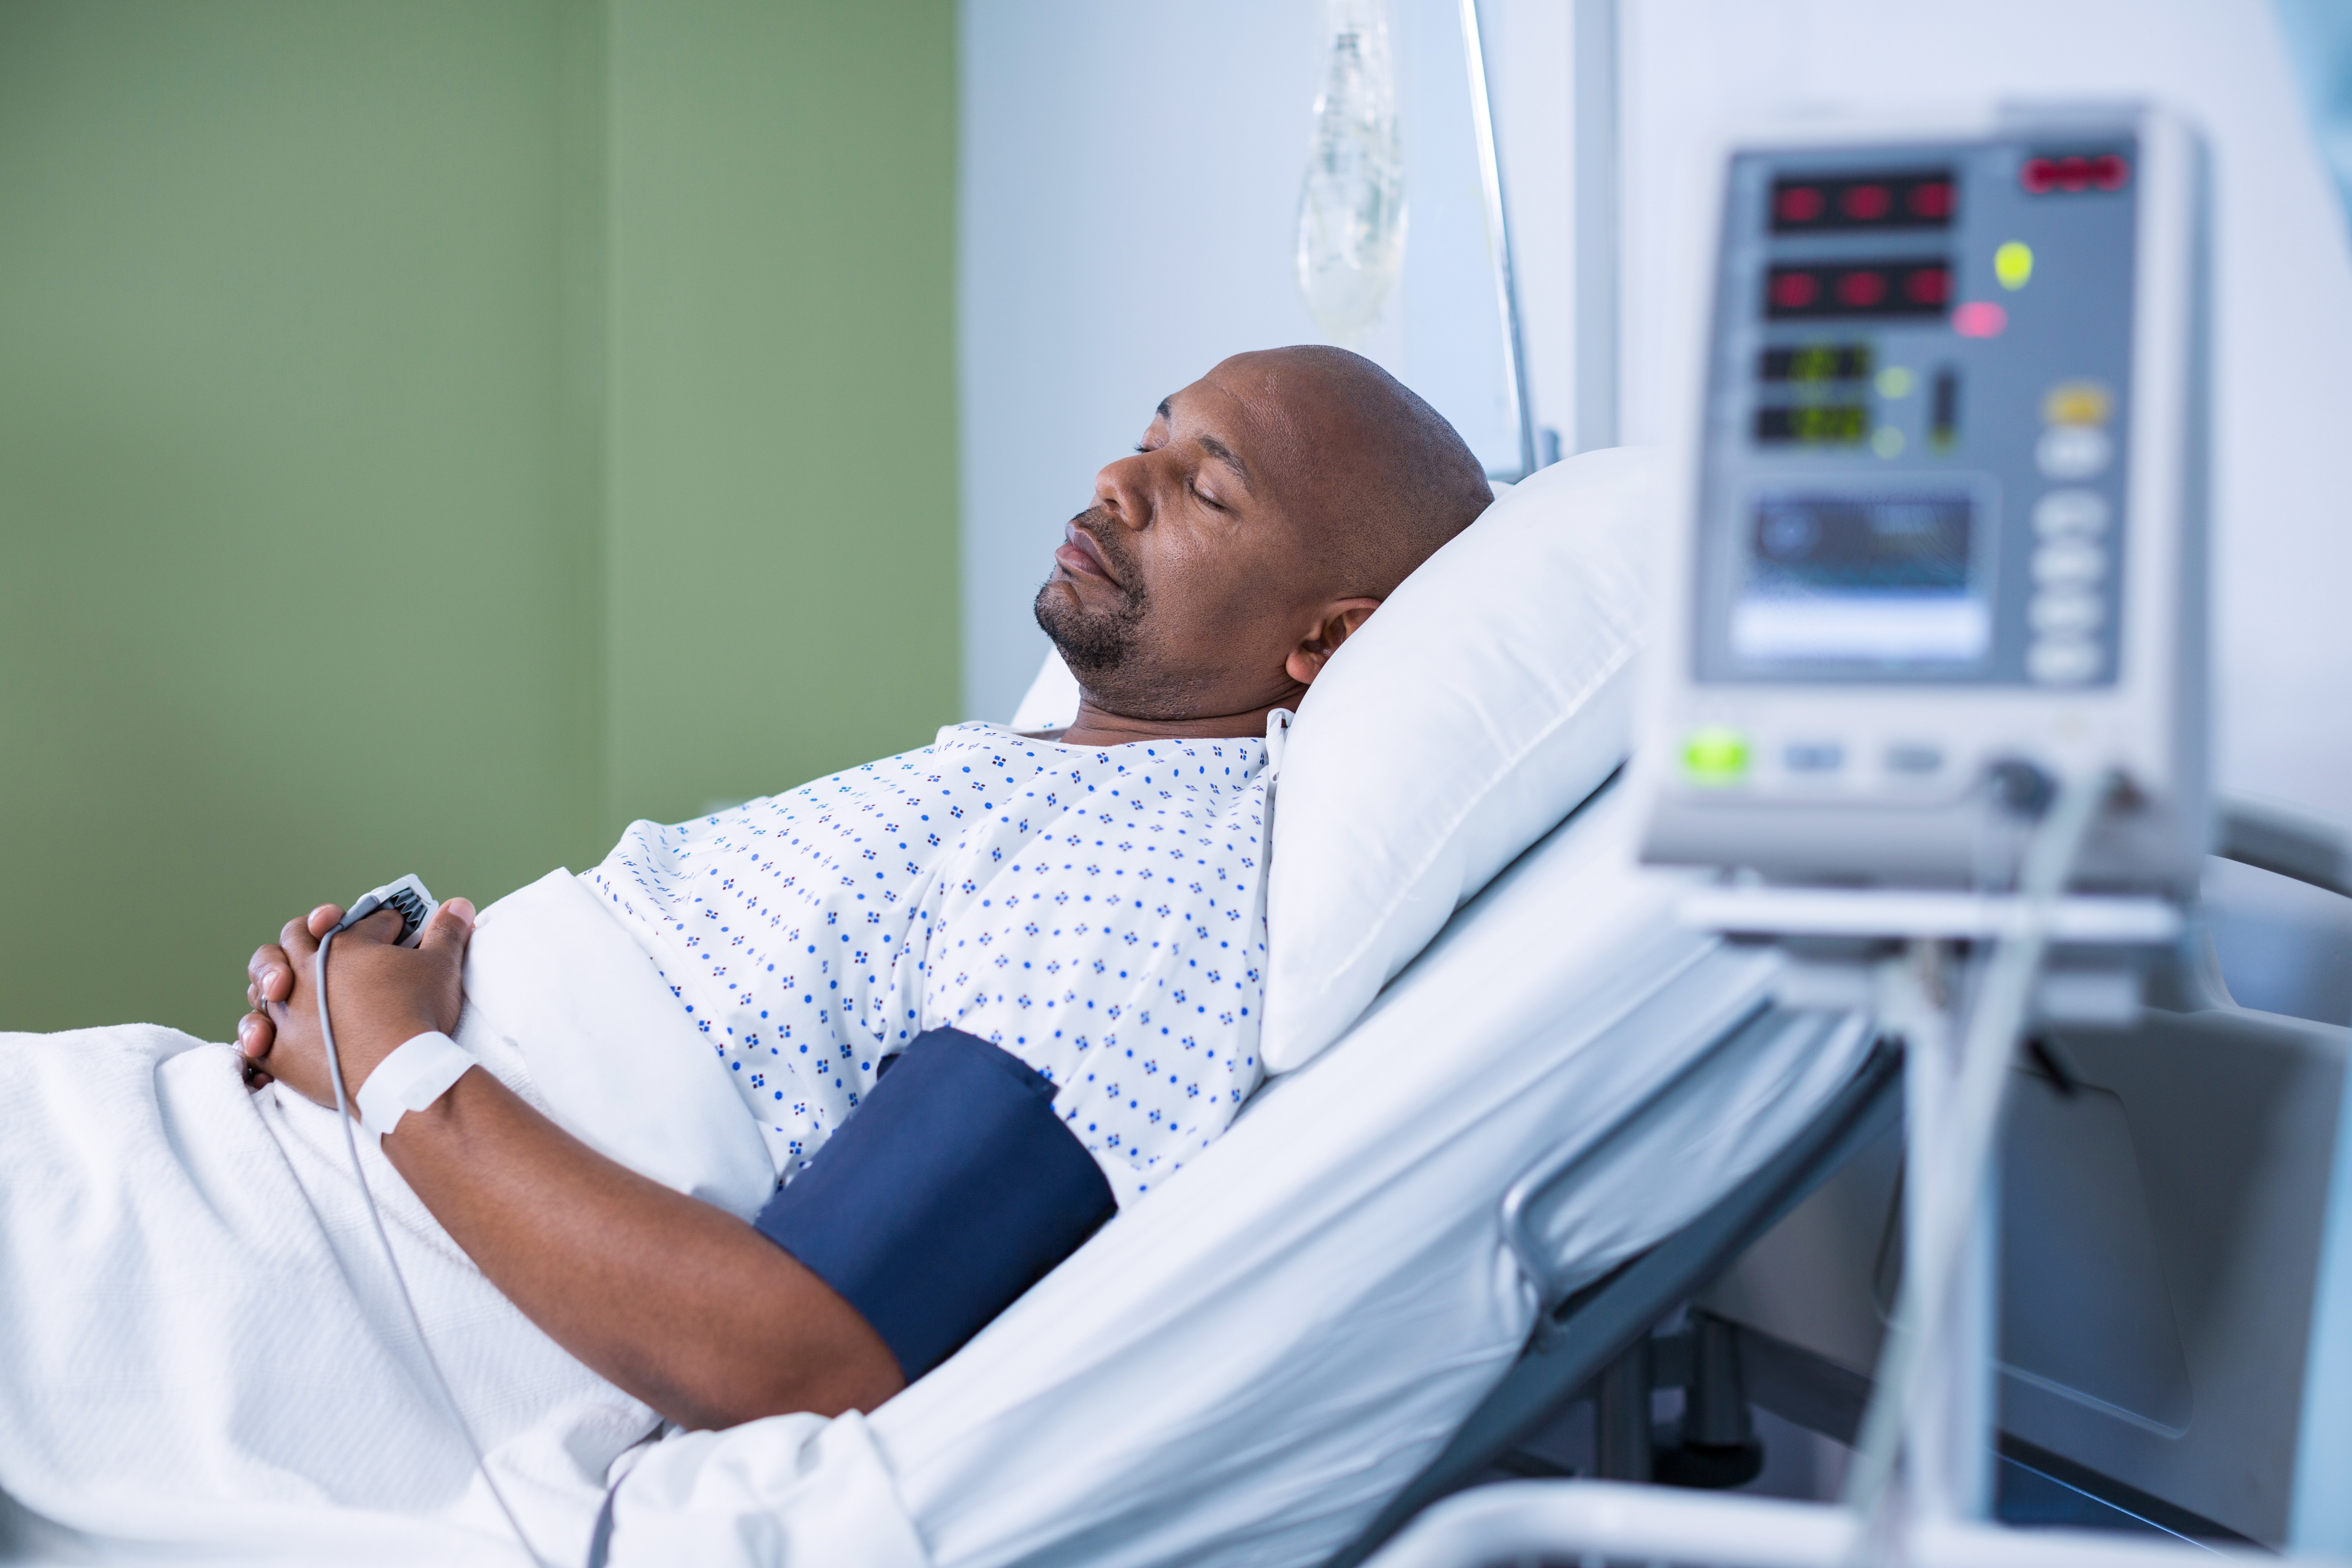 Prevent Pressure Injuries to Decrease Costs & Ease Nurse Workloads